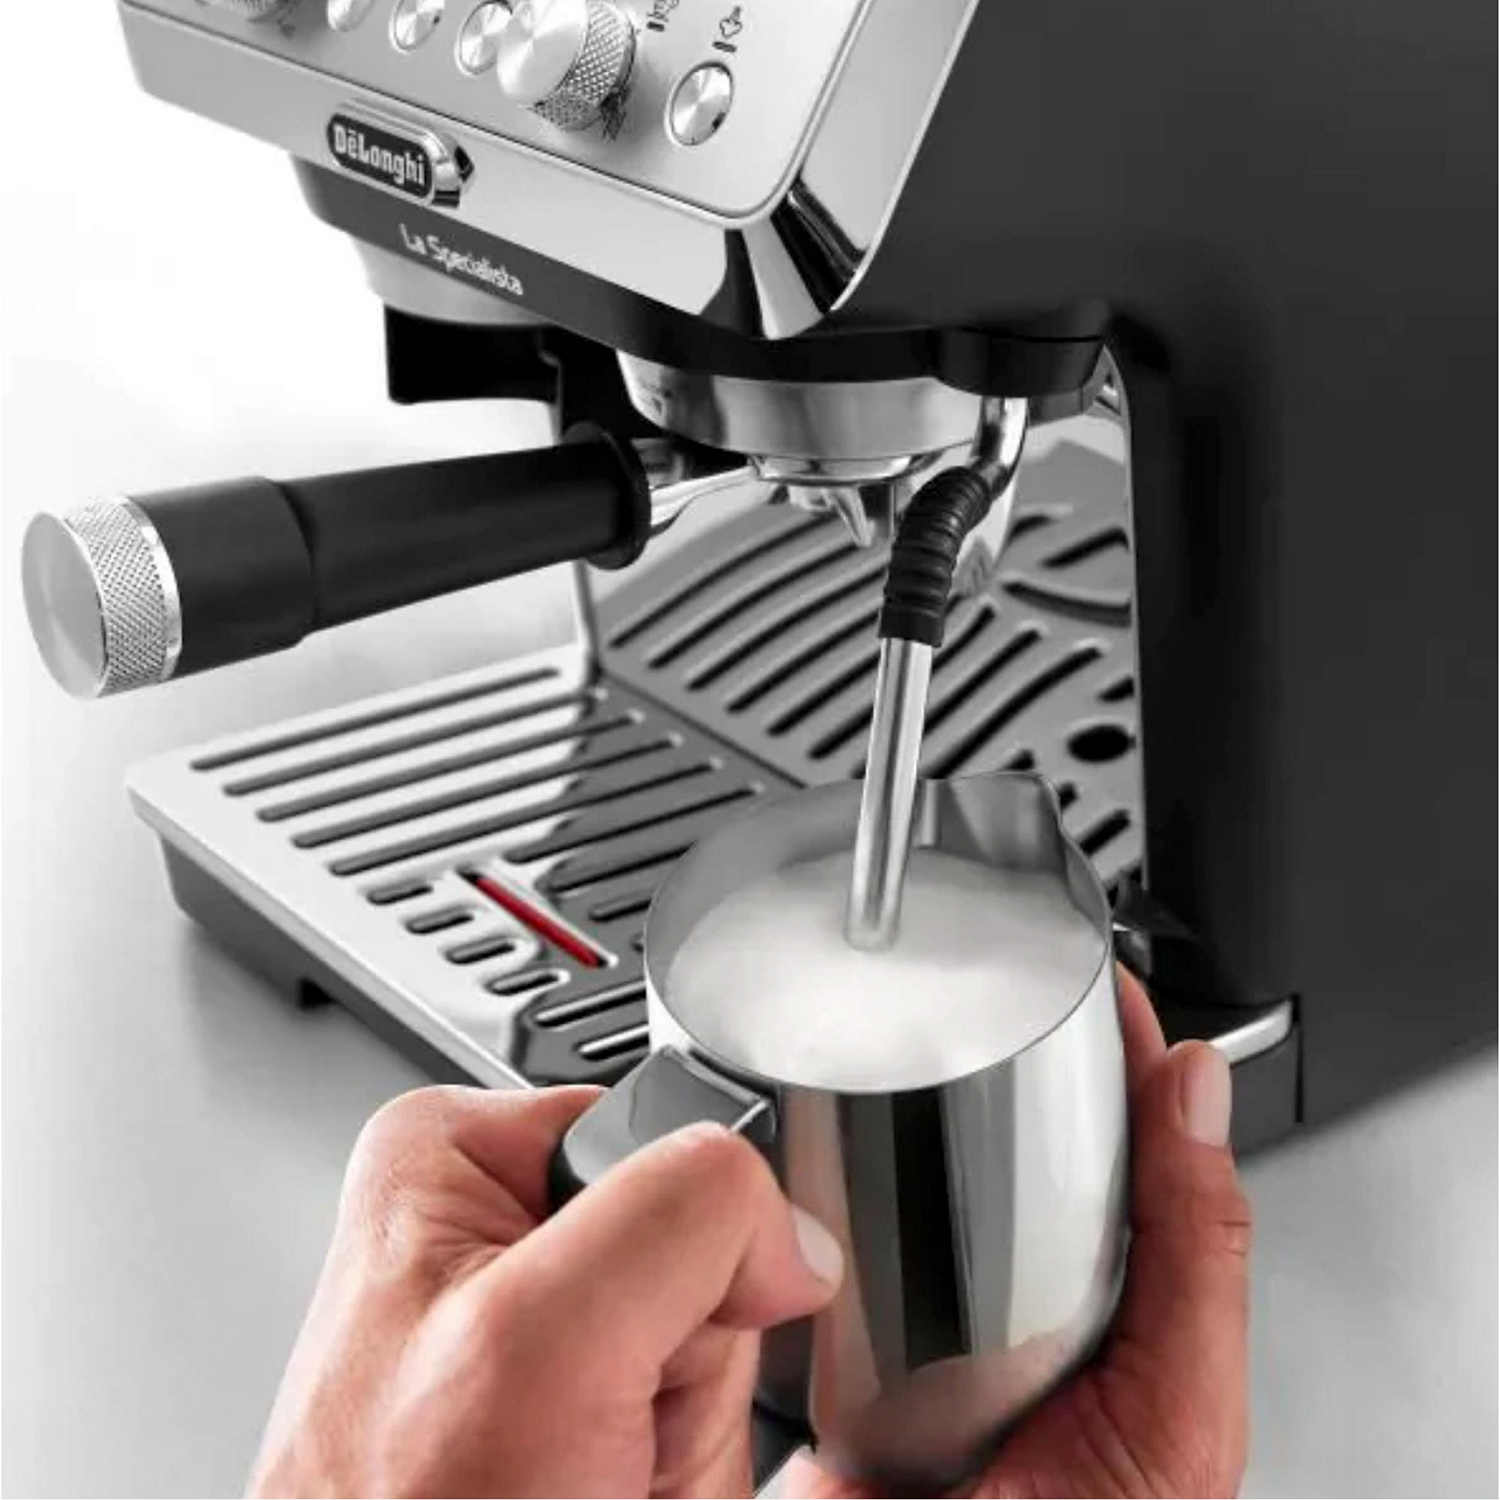 La Specialista Arte Manual Espresso Maker